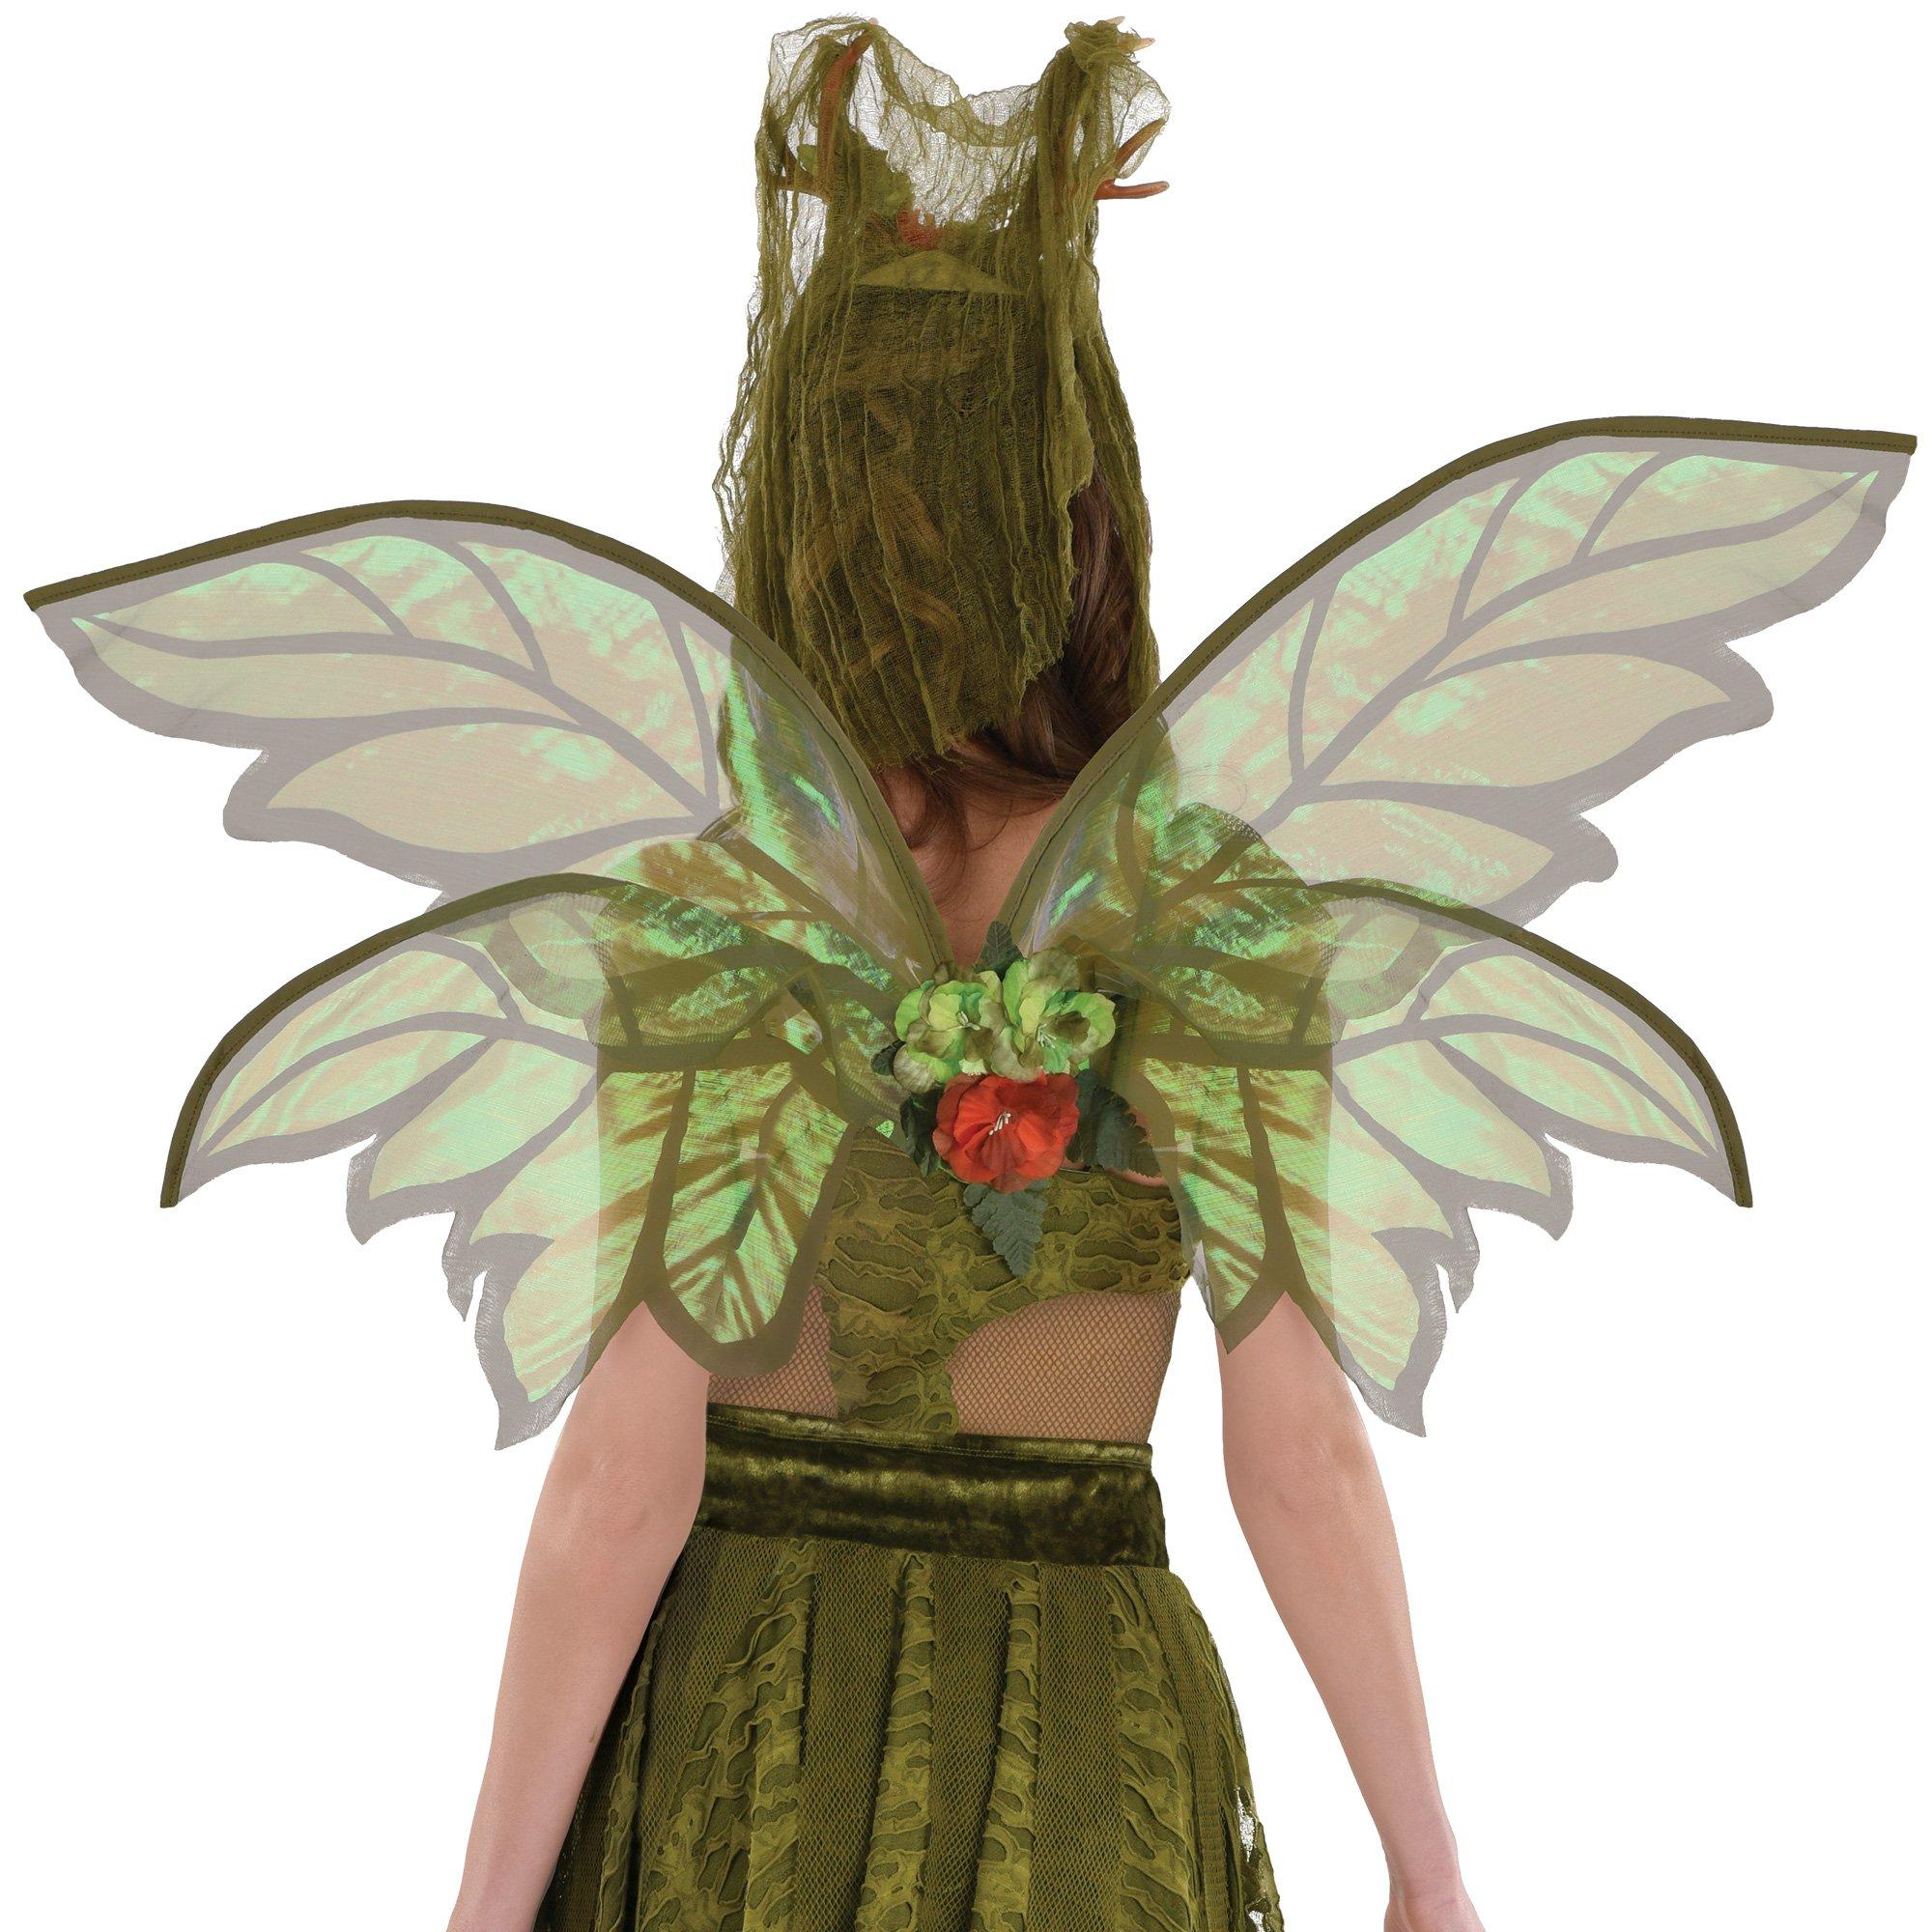 woodland fairy costume women